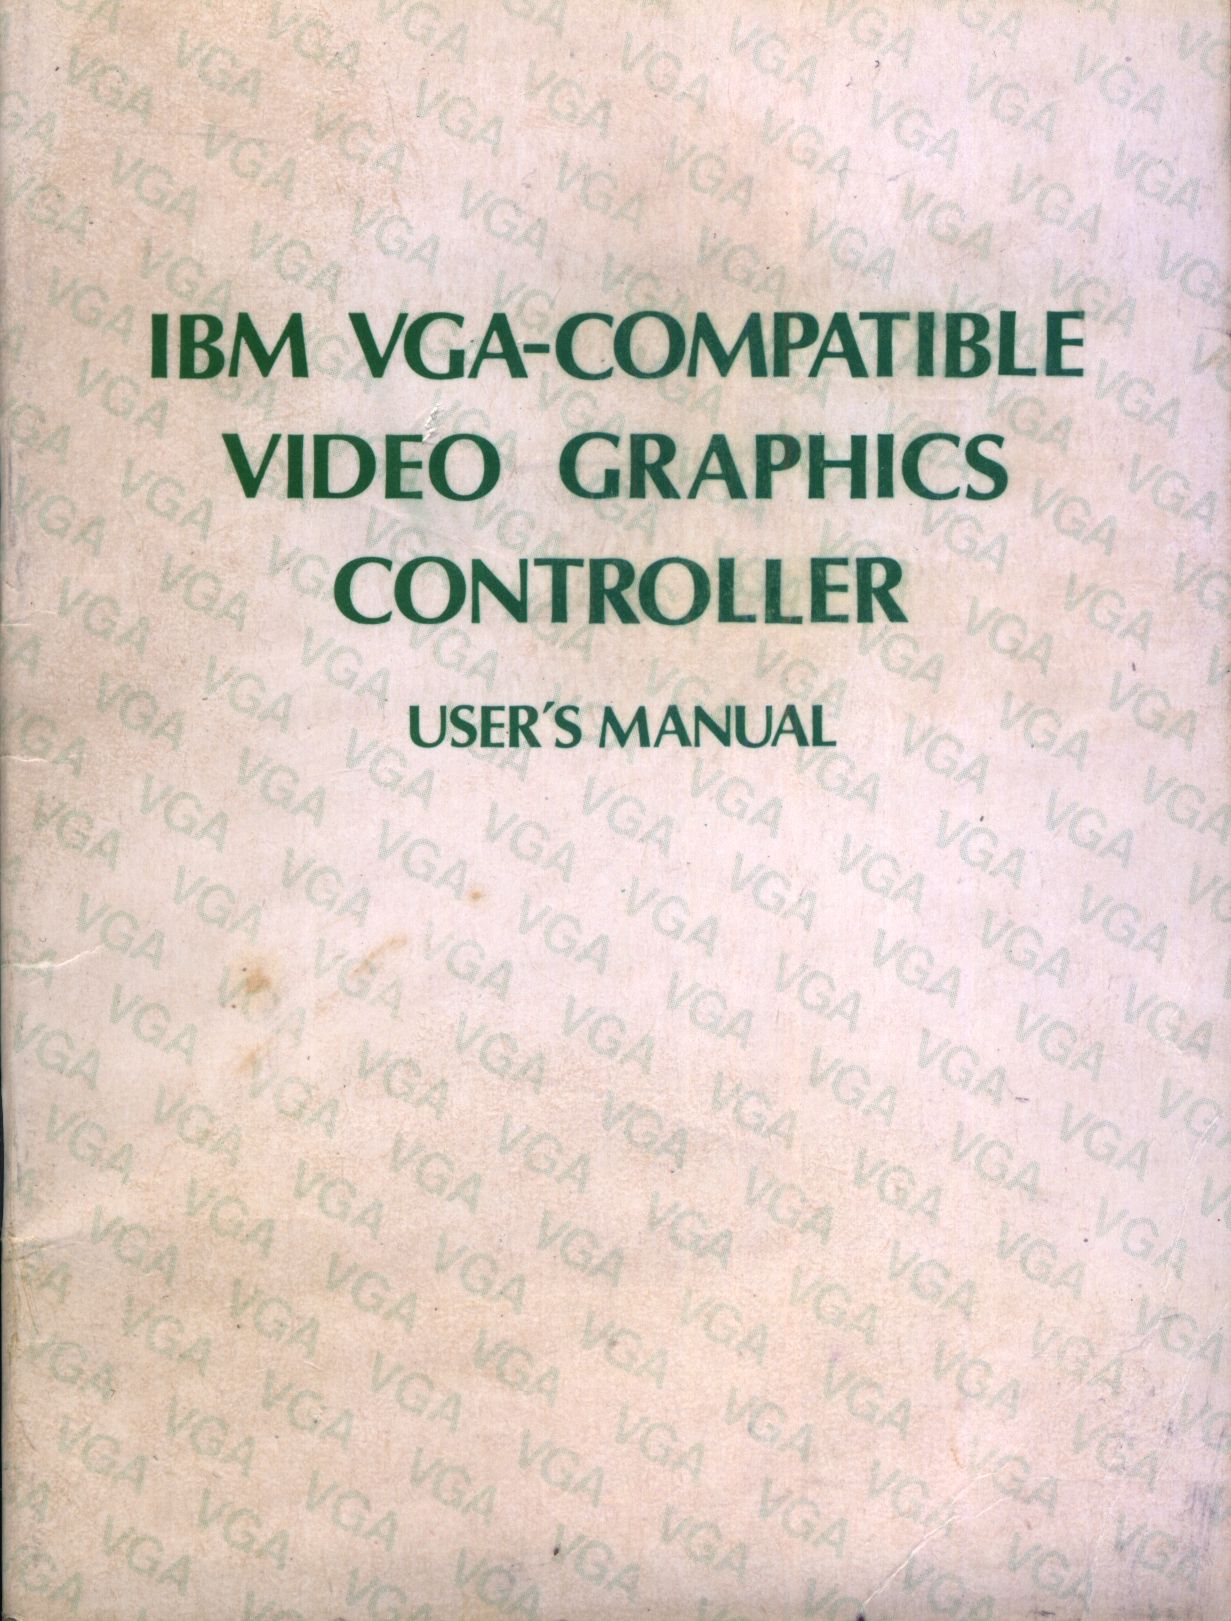 VGA IBM